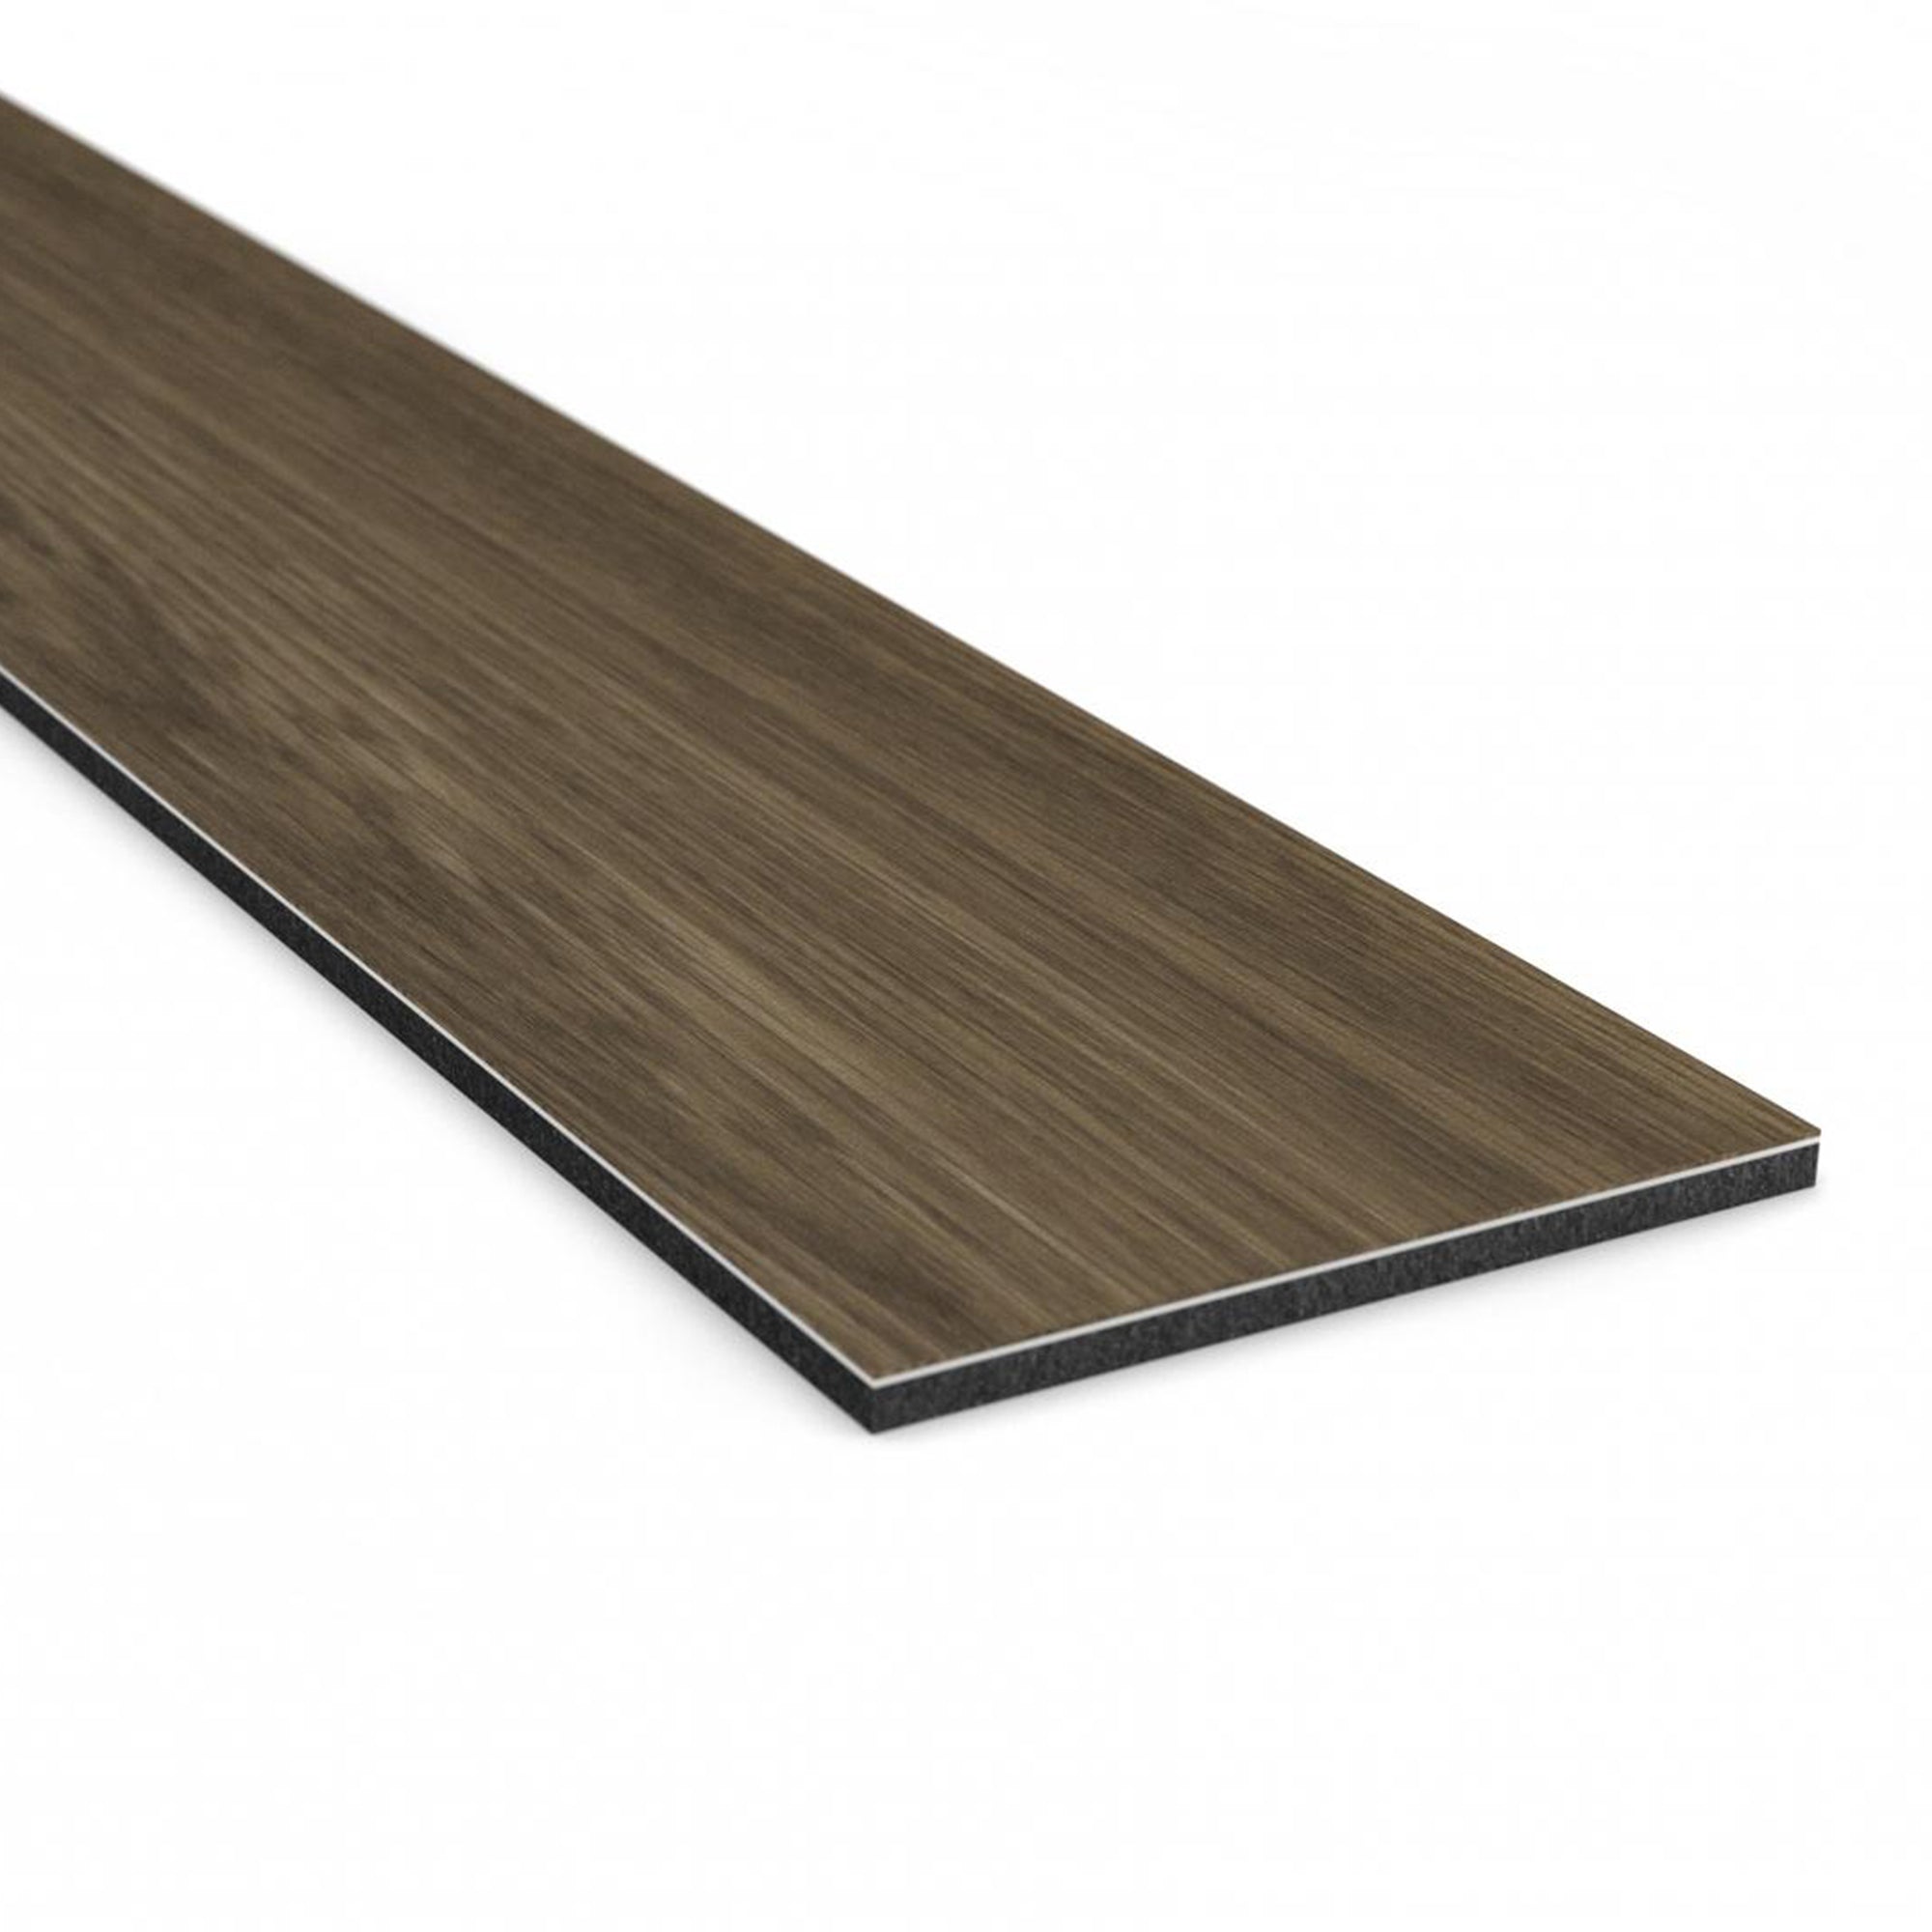 Ecore Heritage Motivate PVT Tile - 7mm Planks